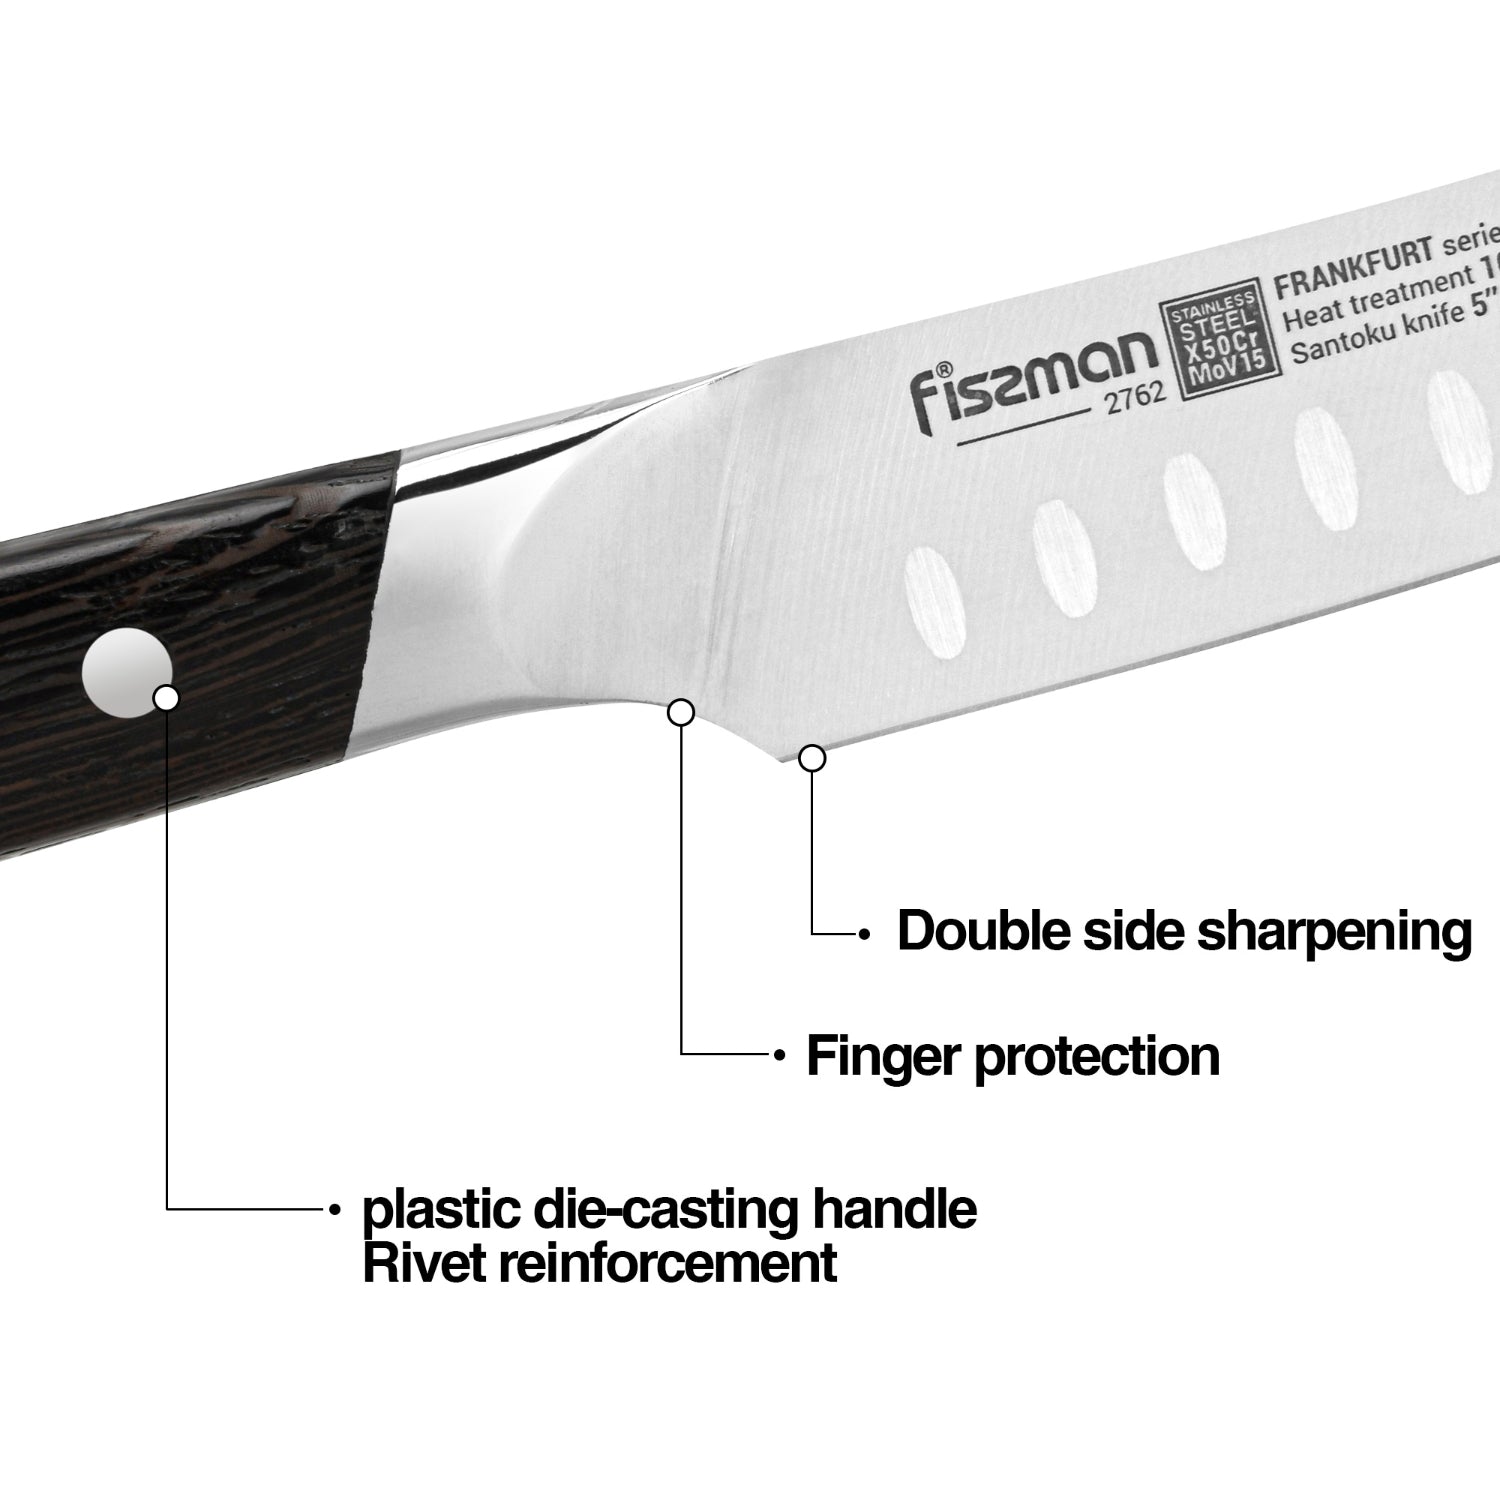 Fissman 5'' Santoku Knife FrankFruit - steel X50Cr15MoV